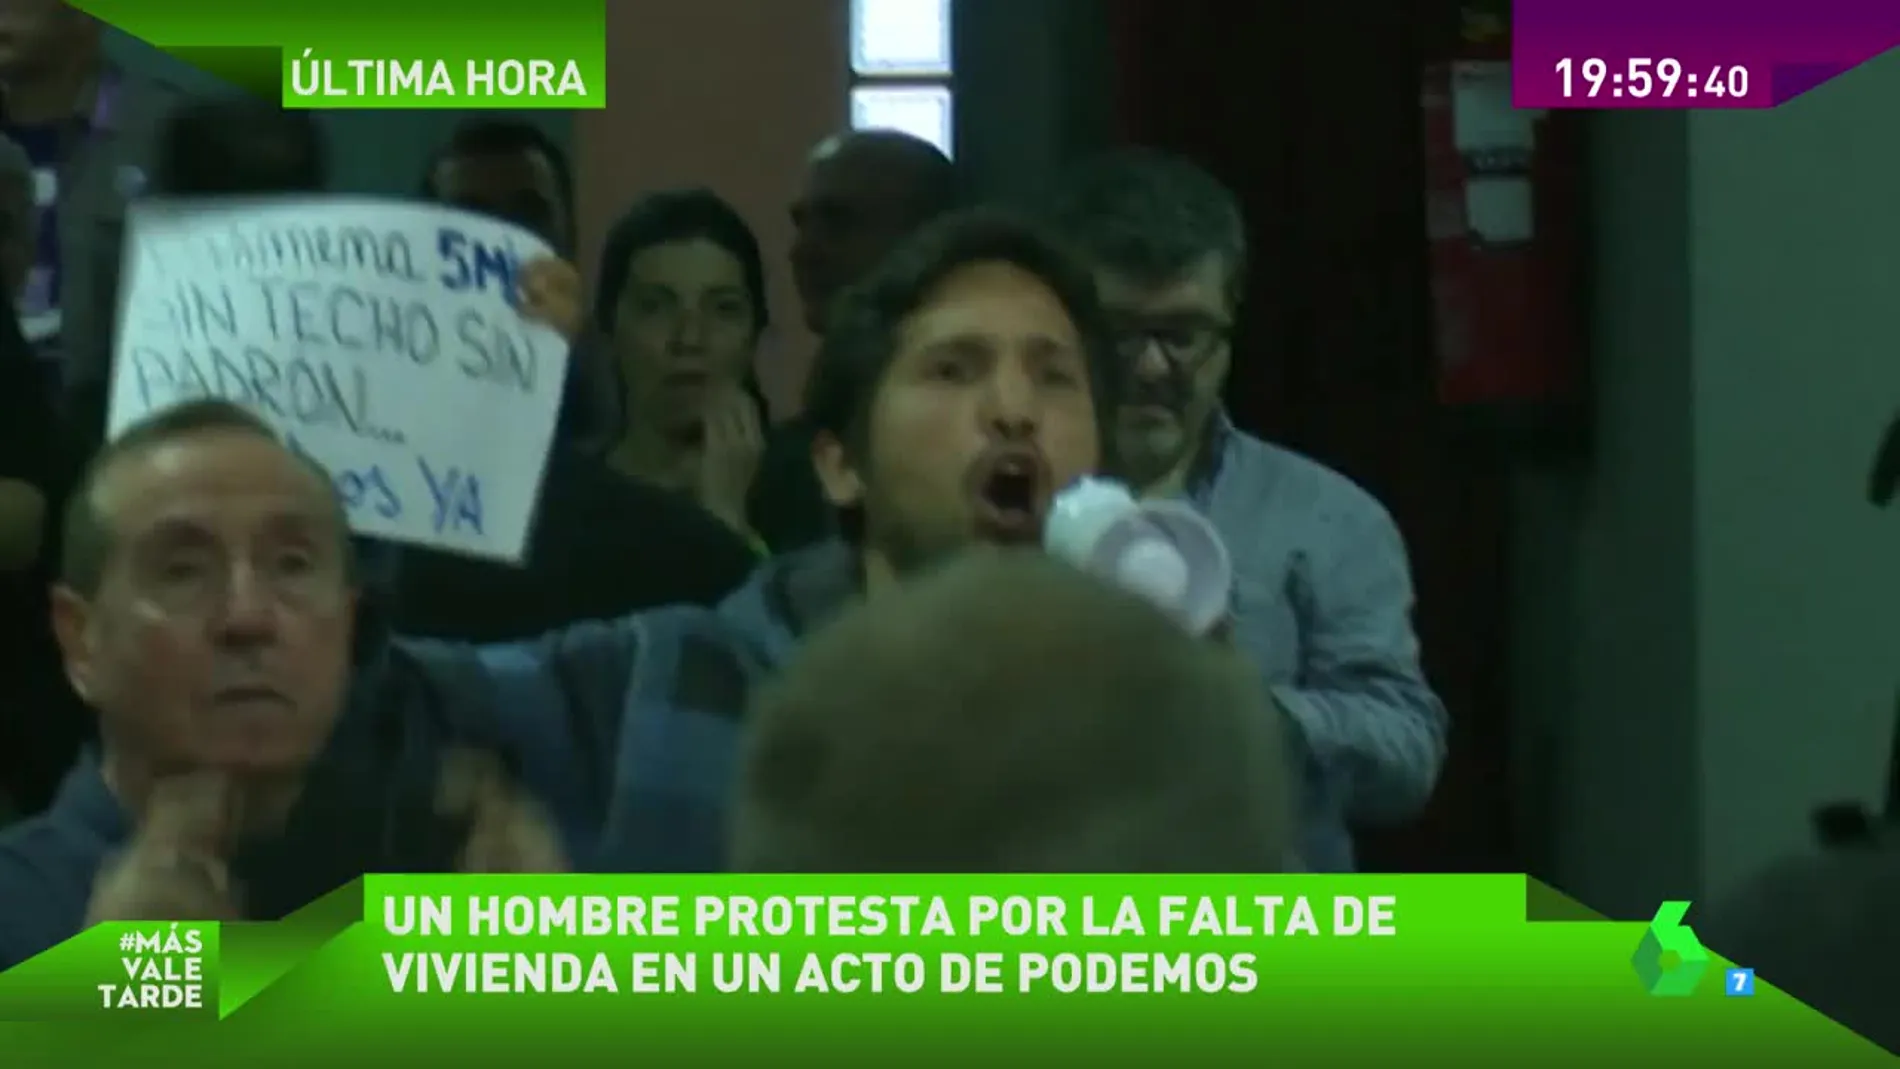 Protesta en un acto de Podemos